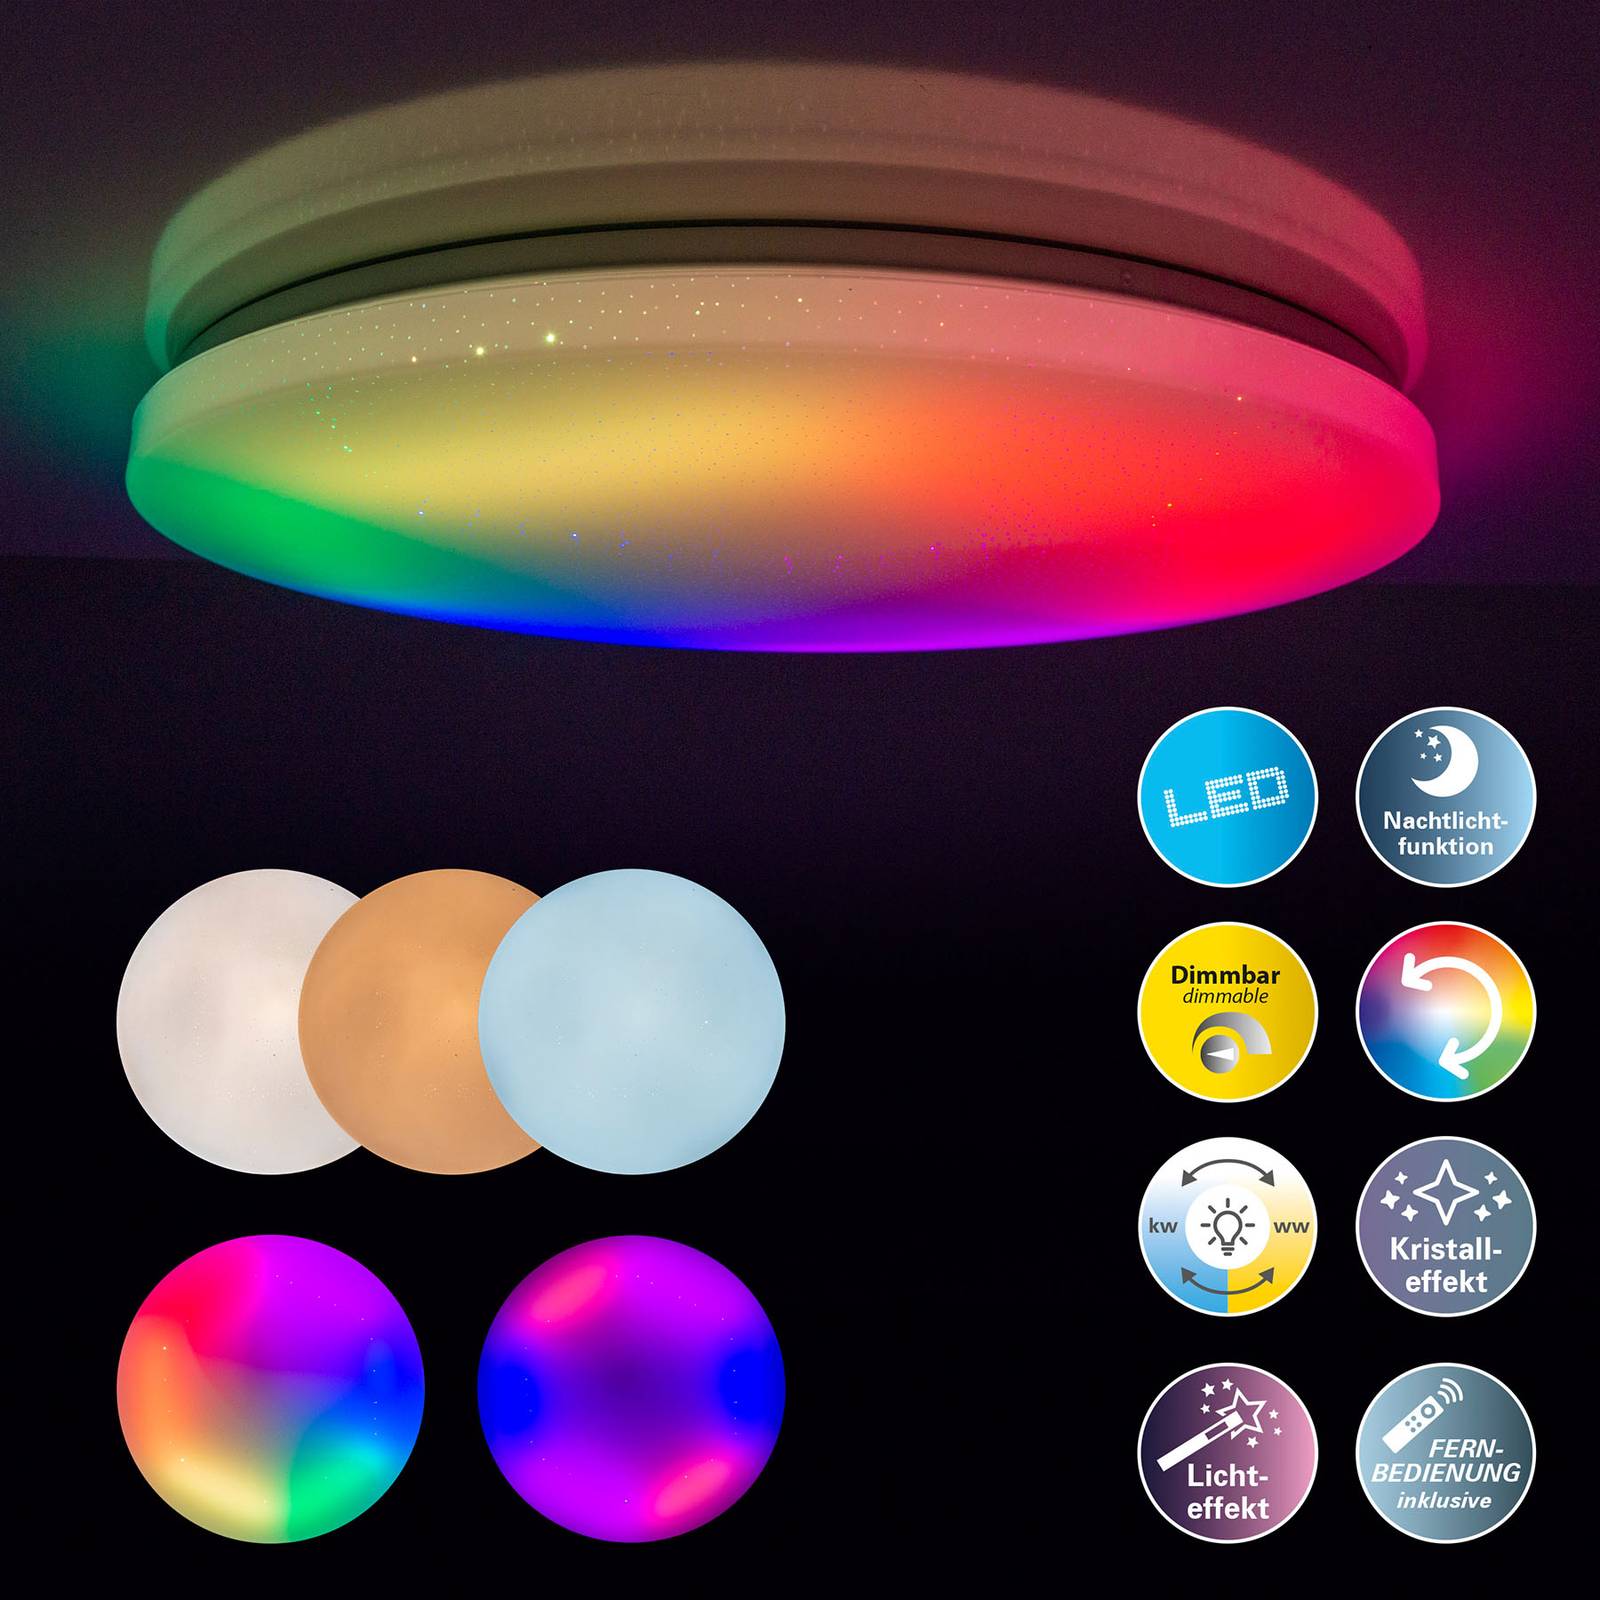 LED plafondlamp Rainbow, dimbaar, RGBW nachtlampje